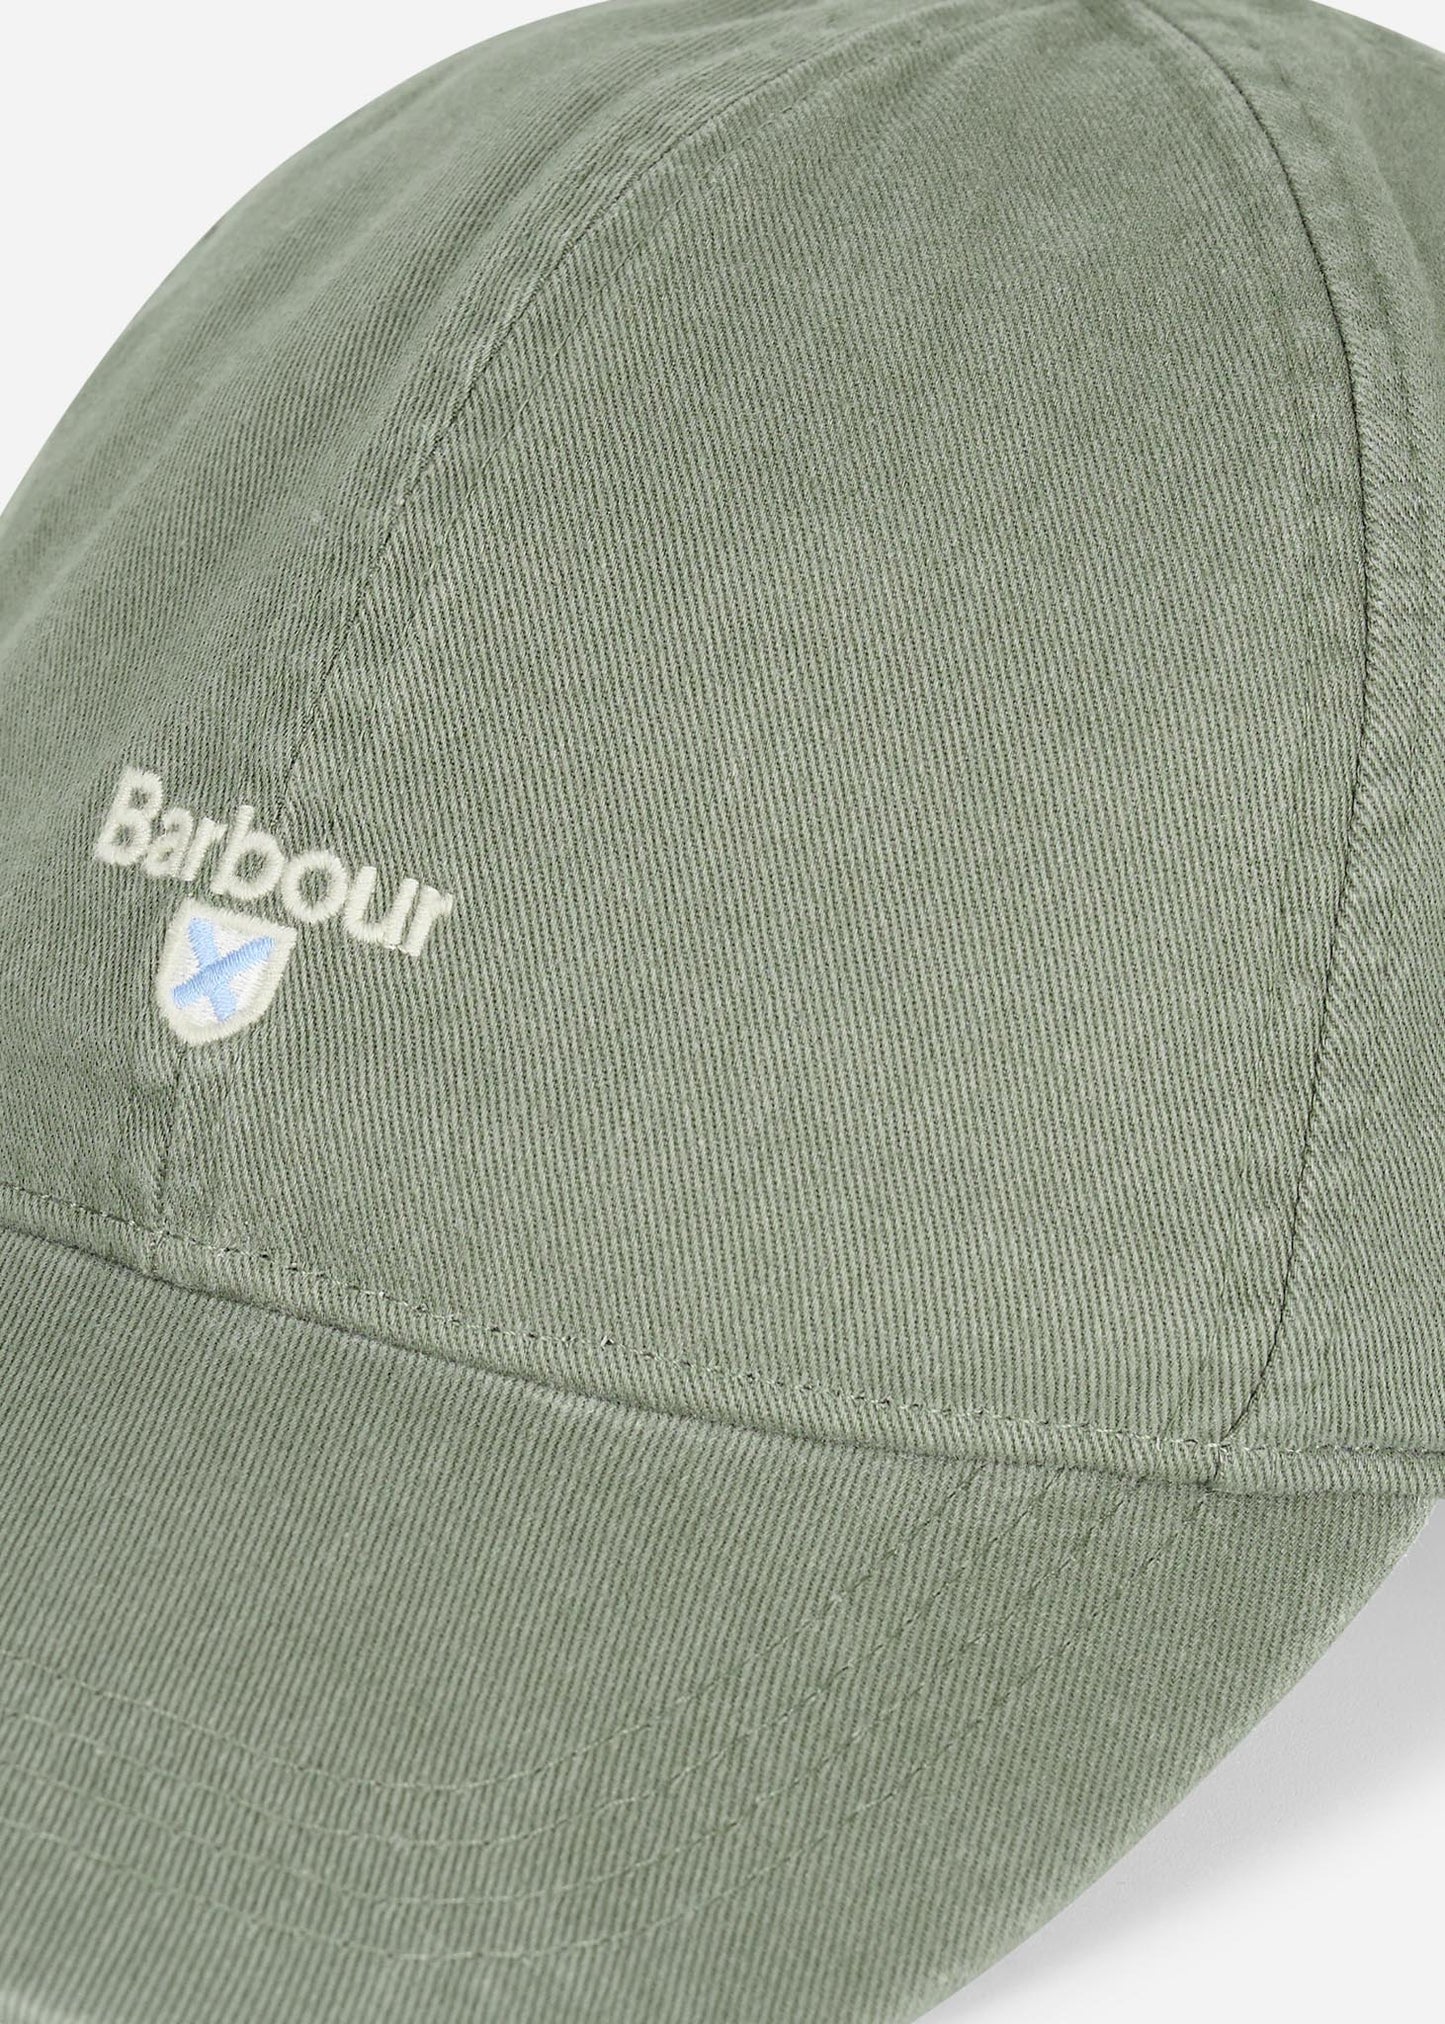 barbour cascade sports cap agave green